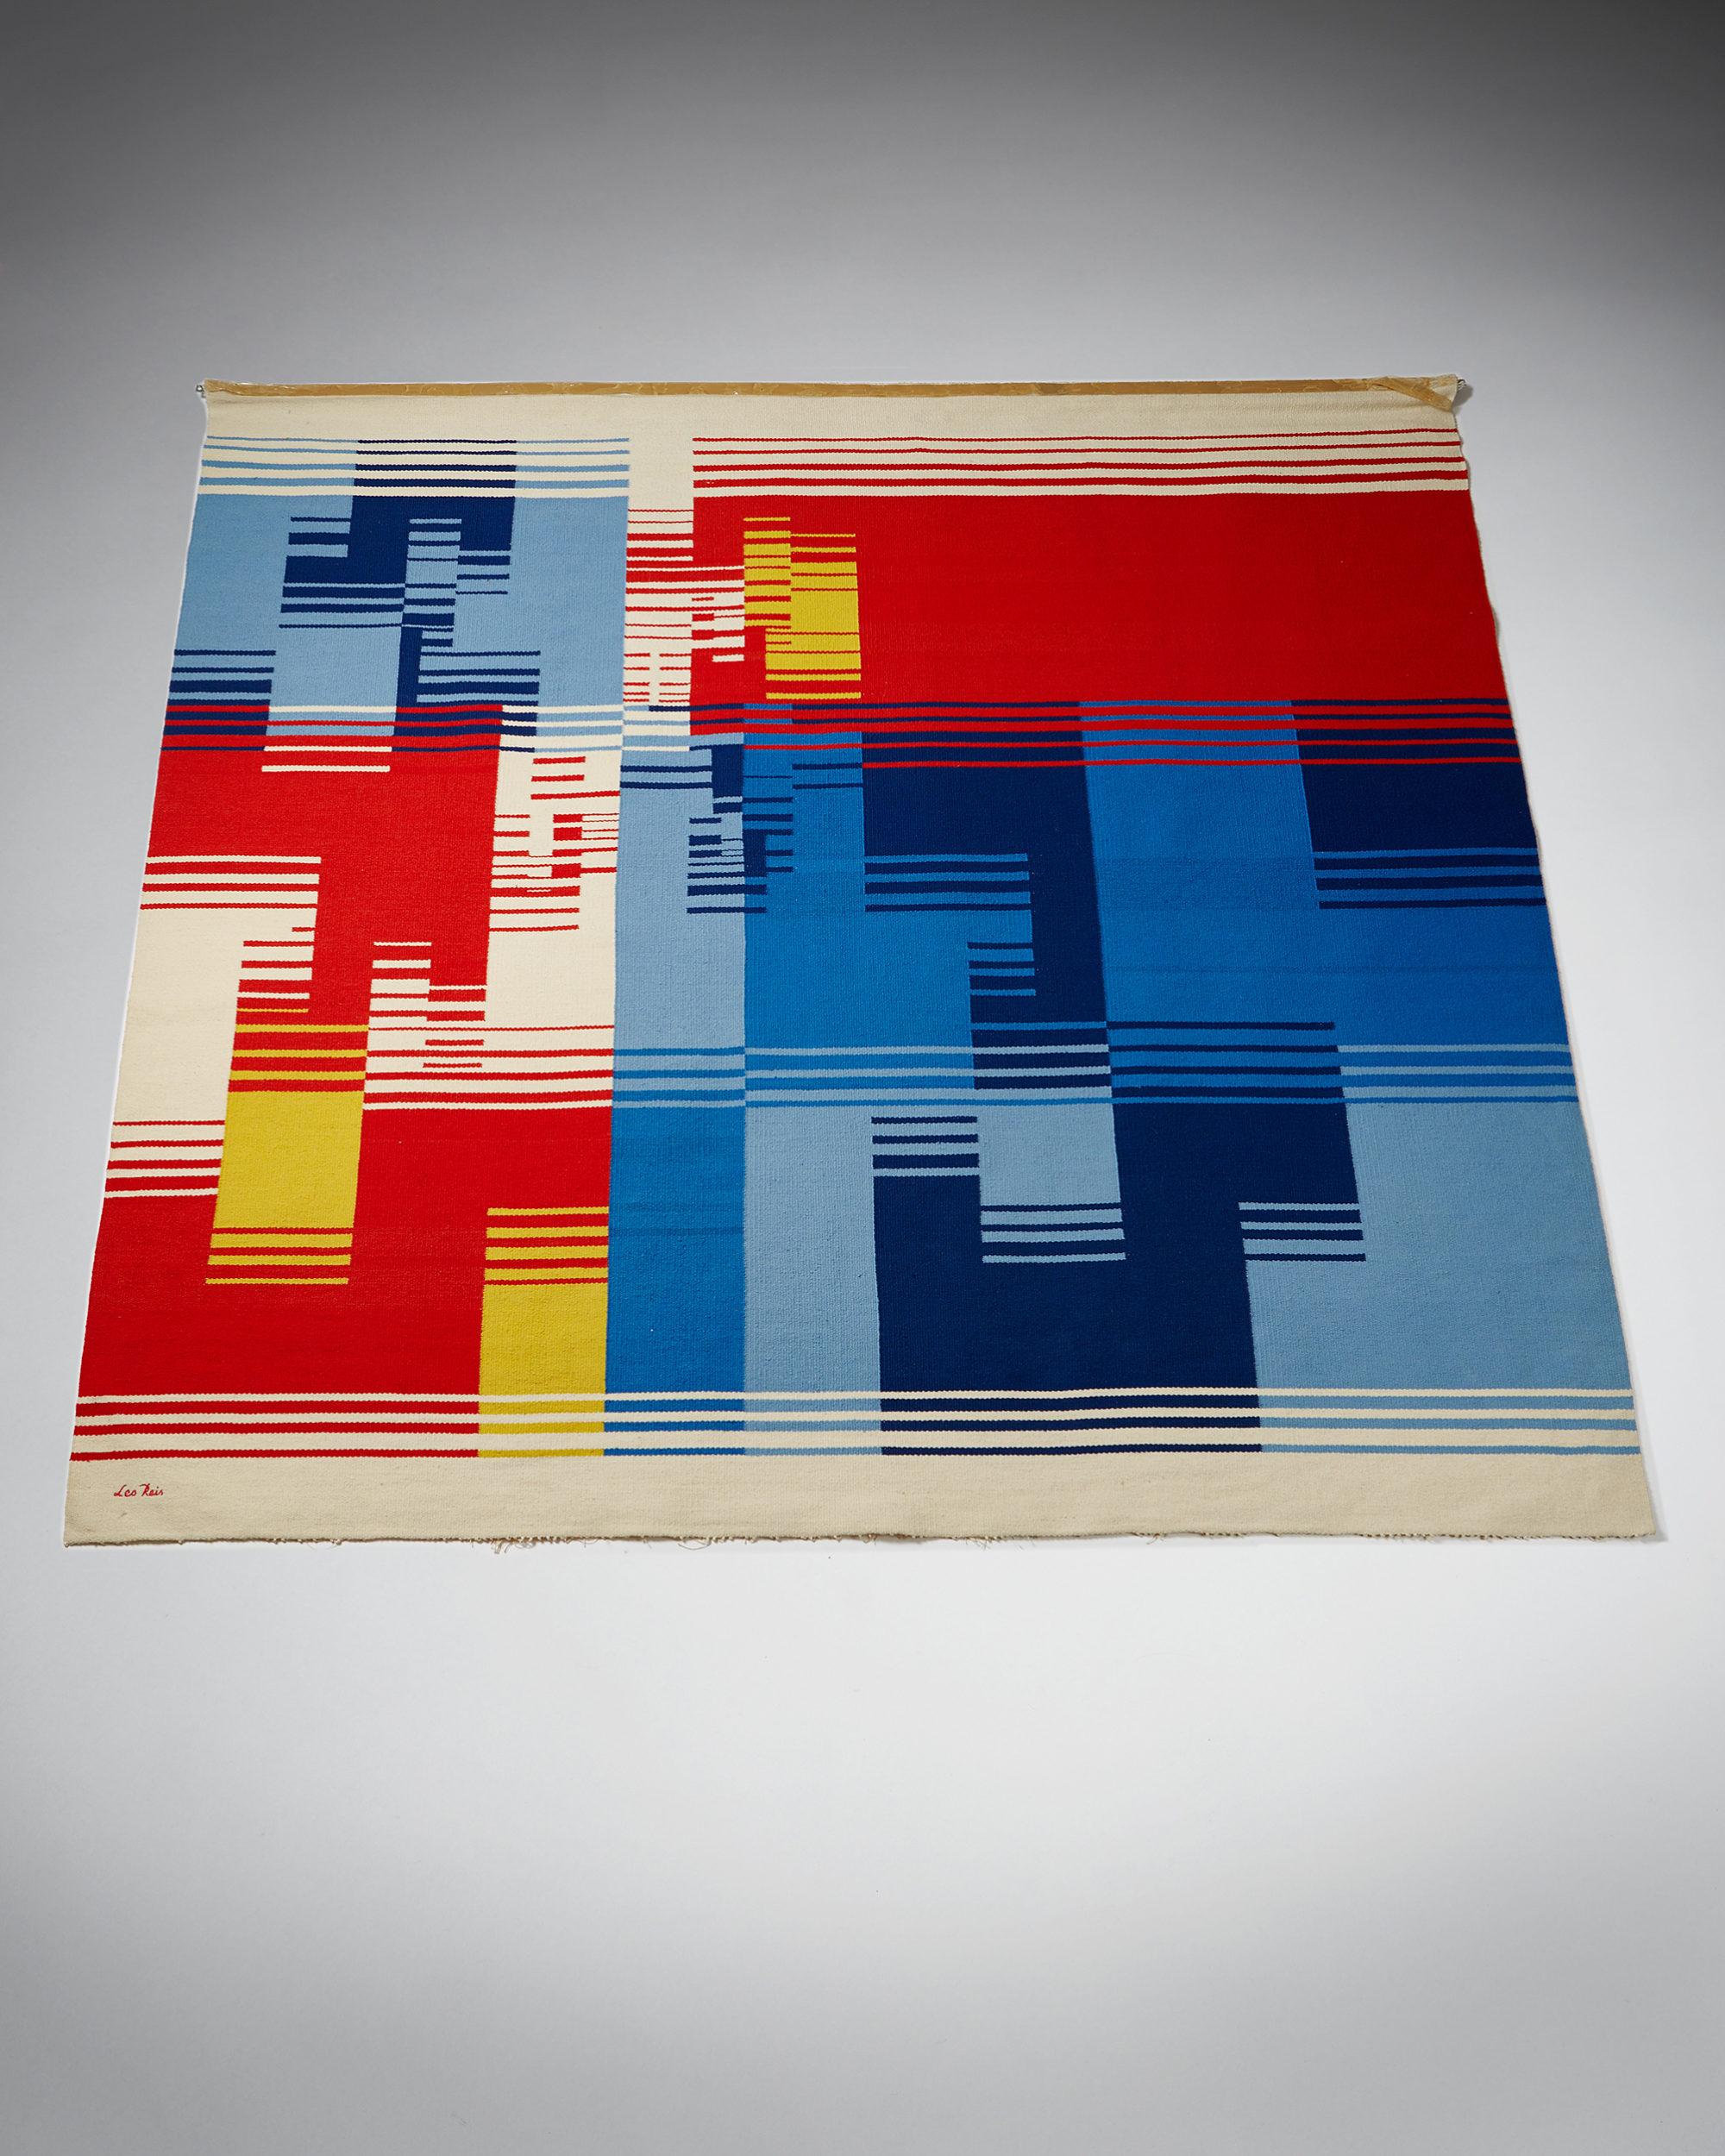 Tapestry by Leo Reis,
Sweden 1980s. 

Handwoven wool.

Measurements:
H: 195 cm/ 6' 4 3/4''
L: 176 cm/ 5' 9 1/4''
